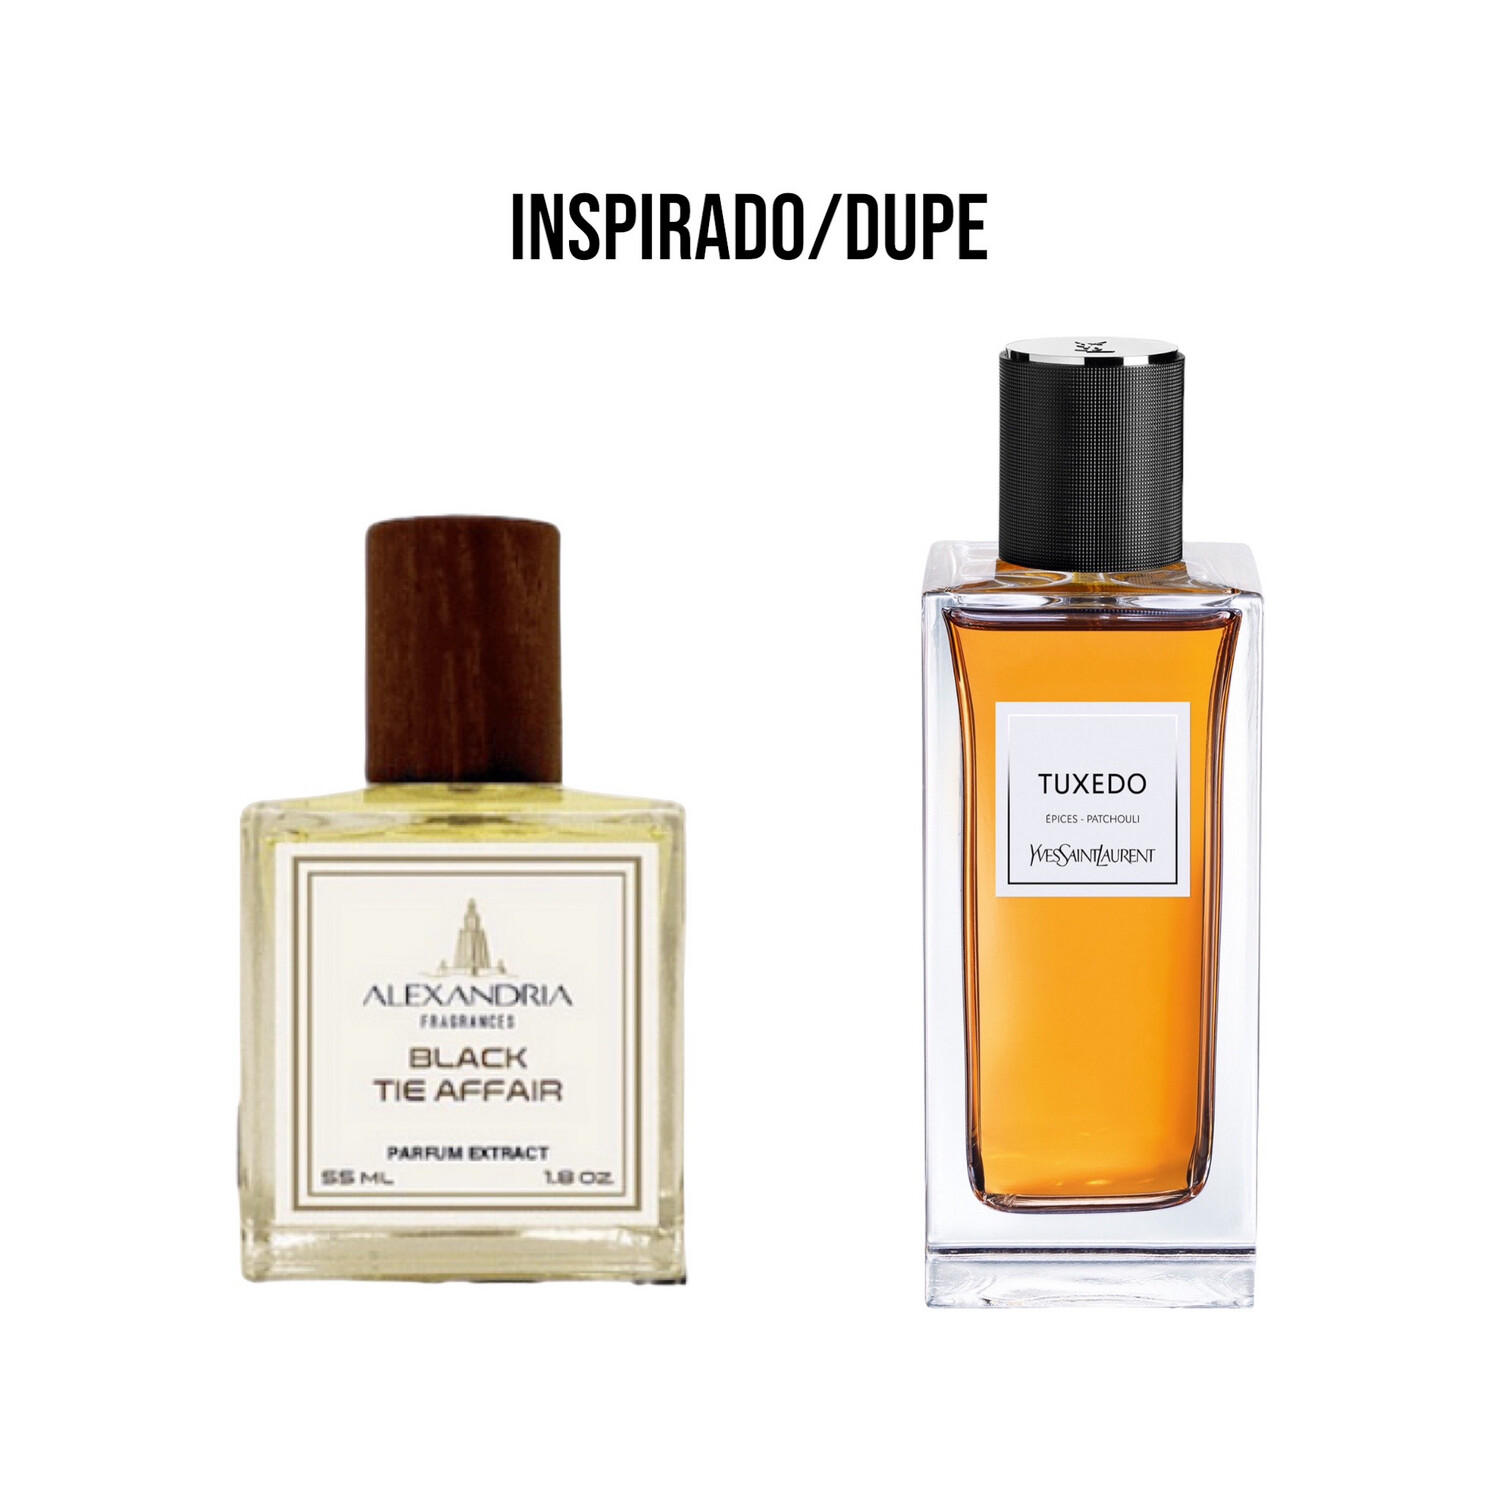 Black Tie Affair Inspirado en Tuxedo Yves Saint Laurent 55ML extracto perfume Alexandria Fragrances